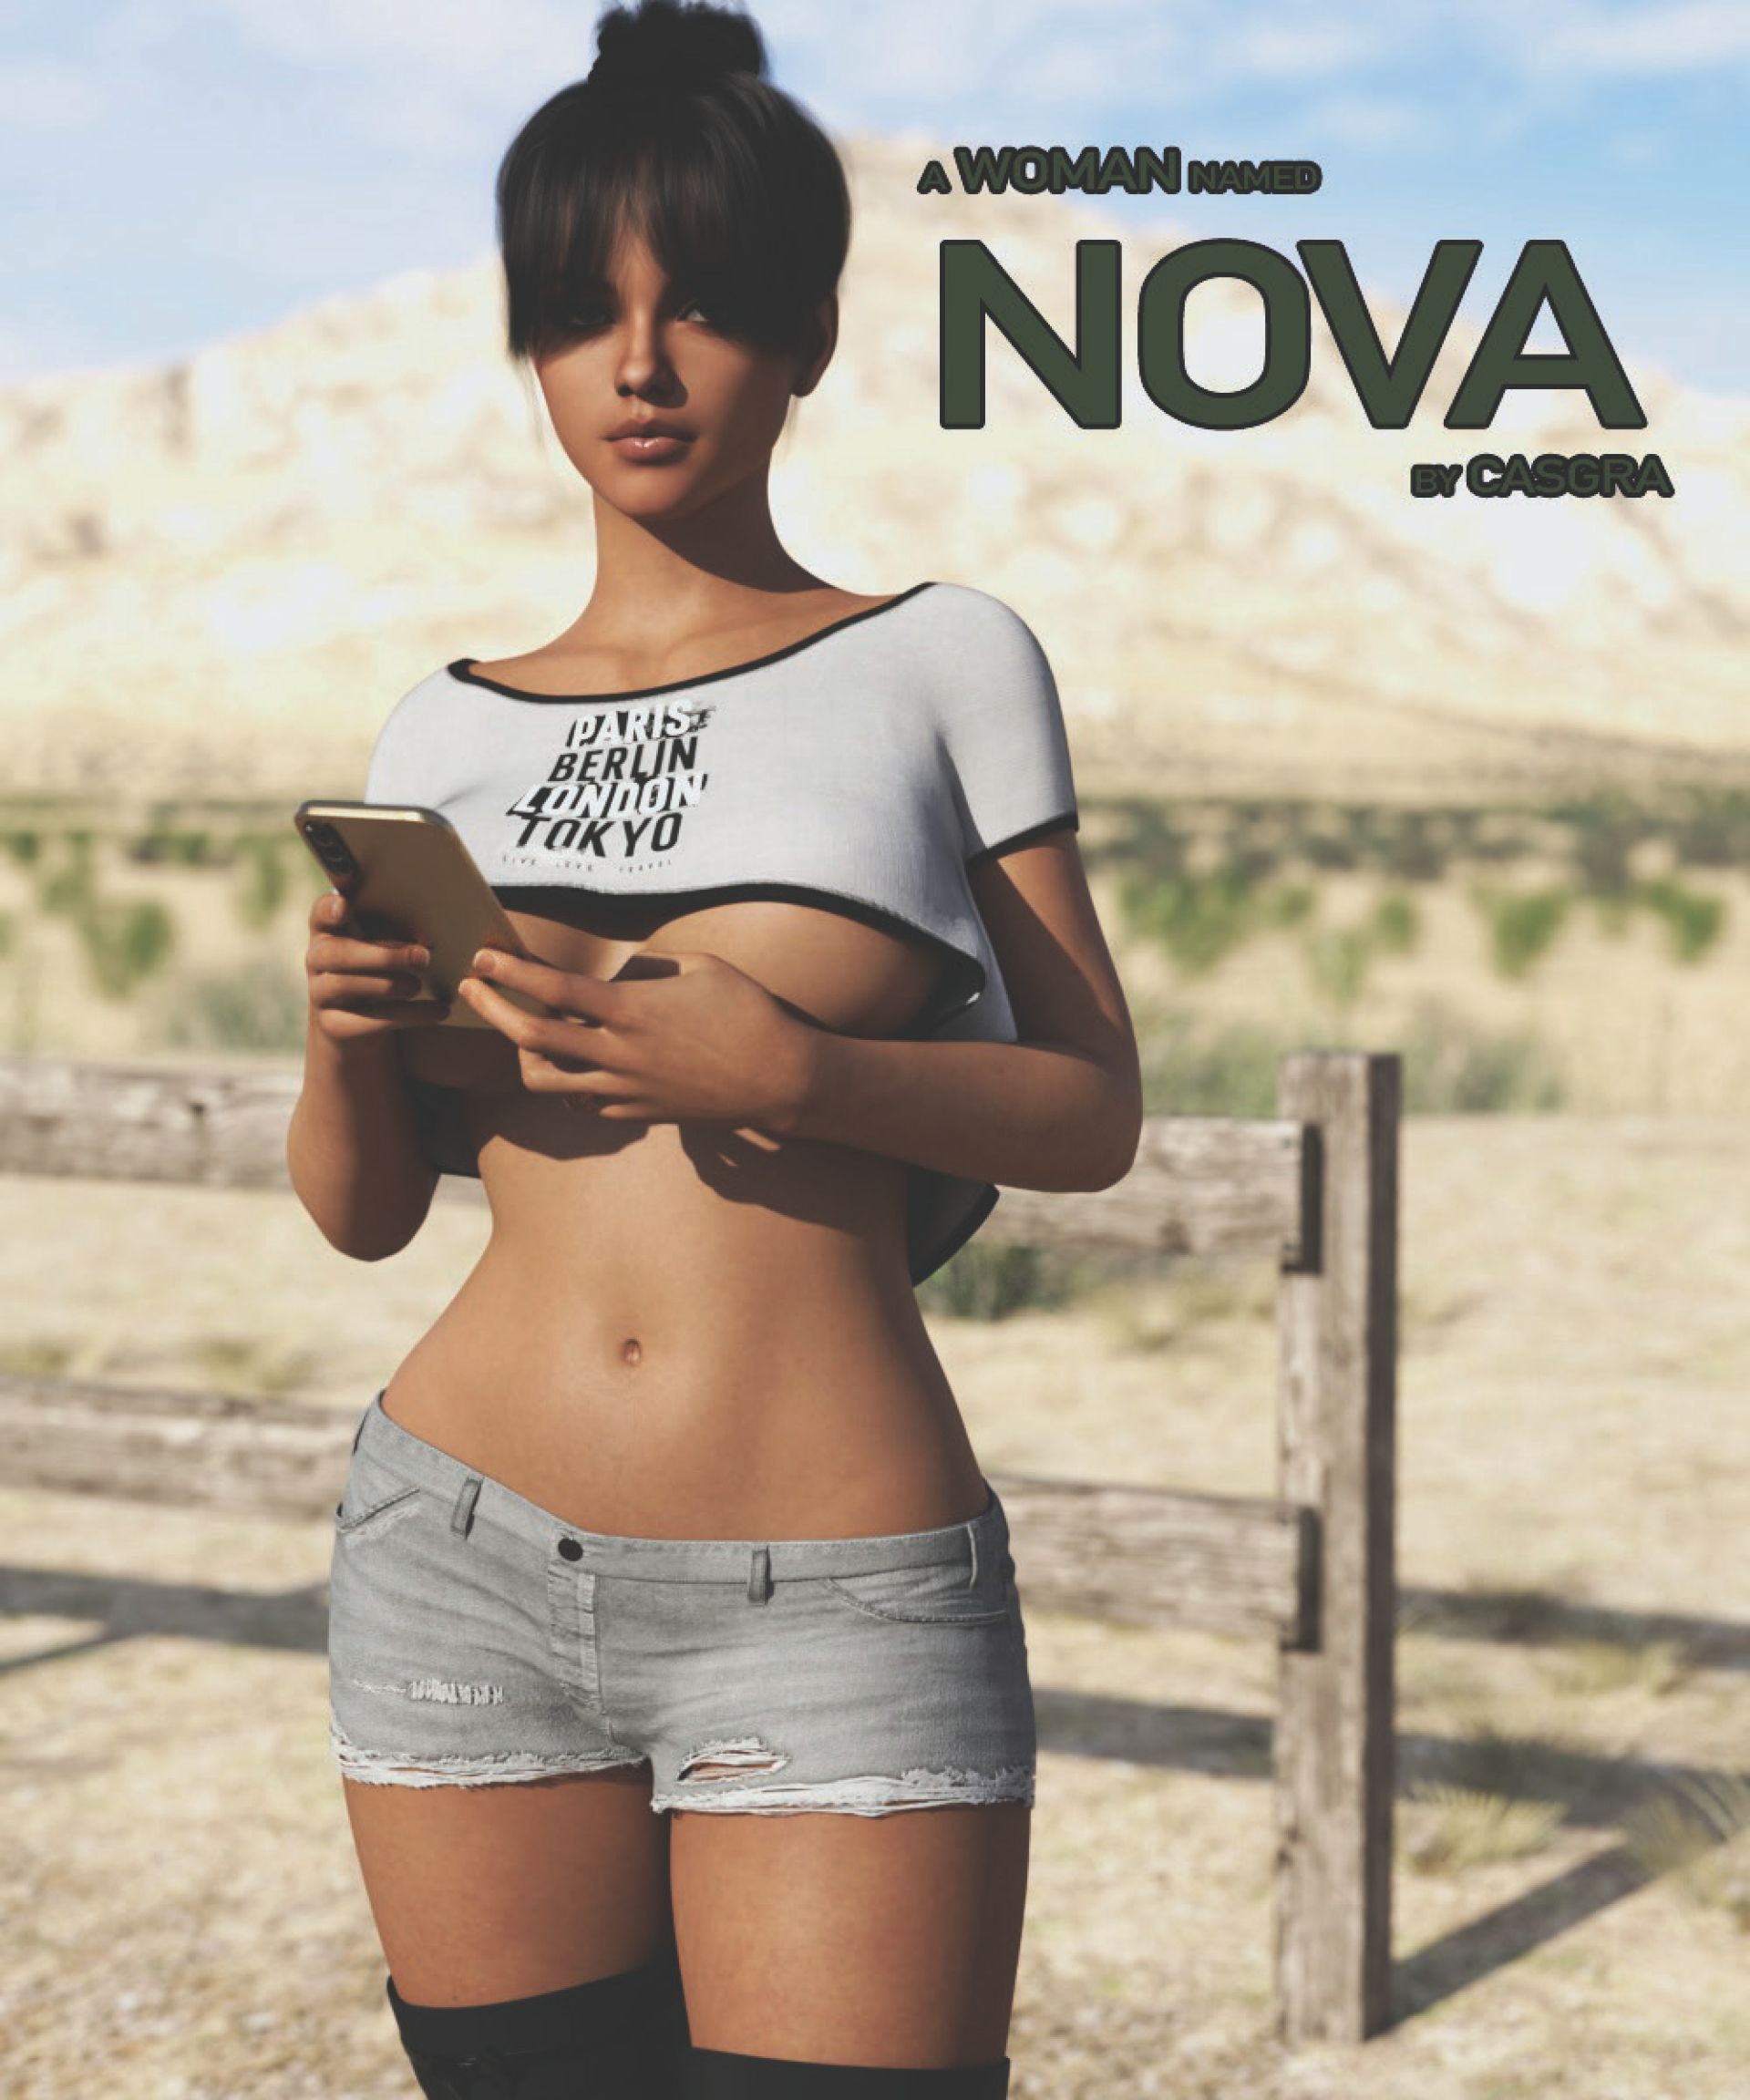 A Woman Named Nova Casgra Porn Comic picture